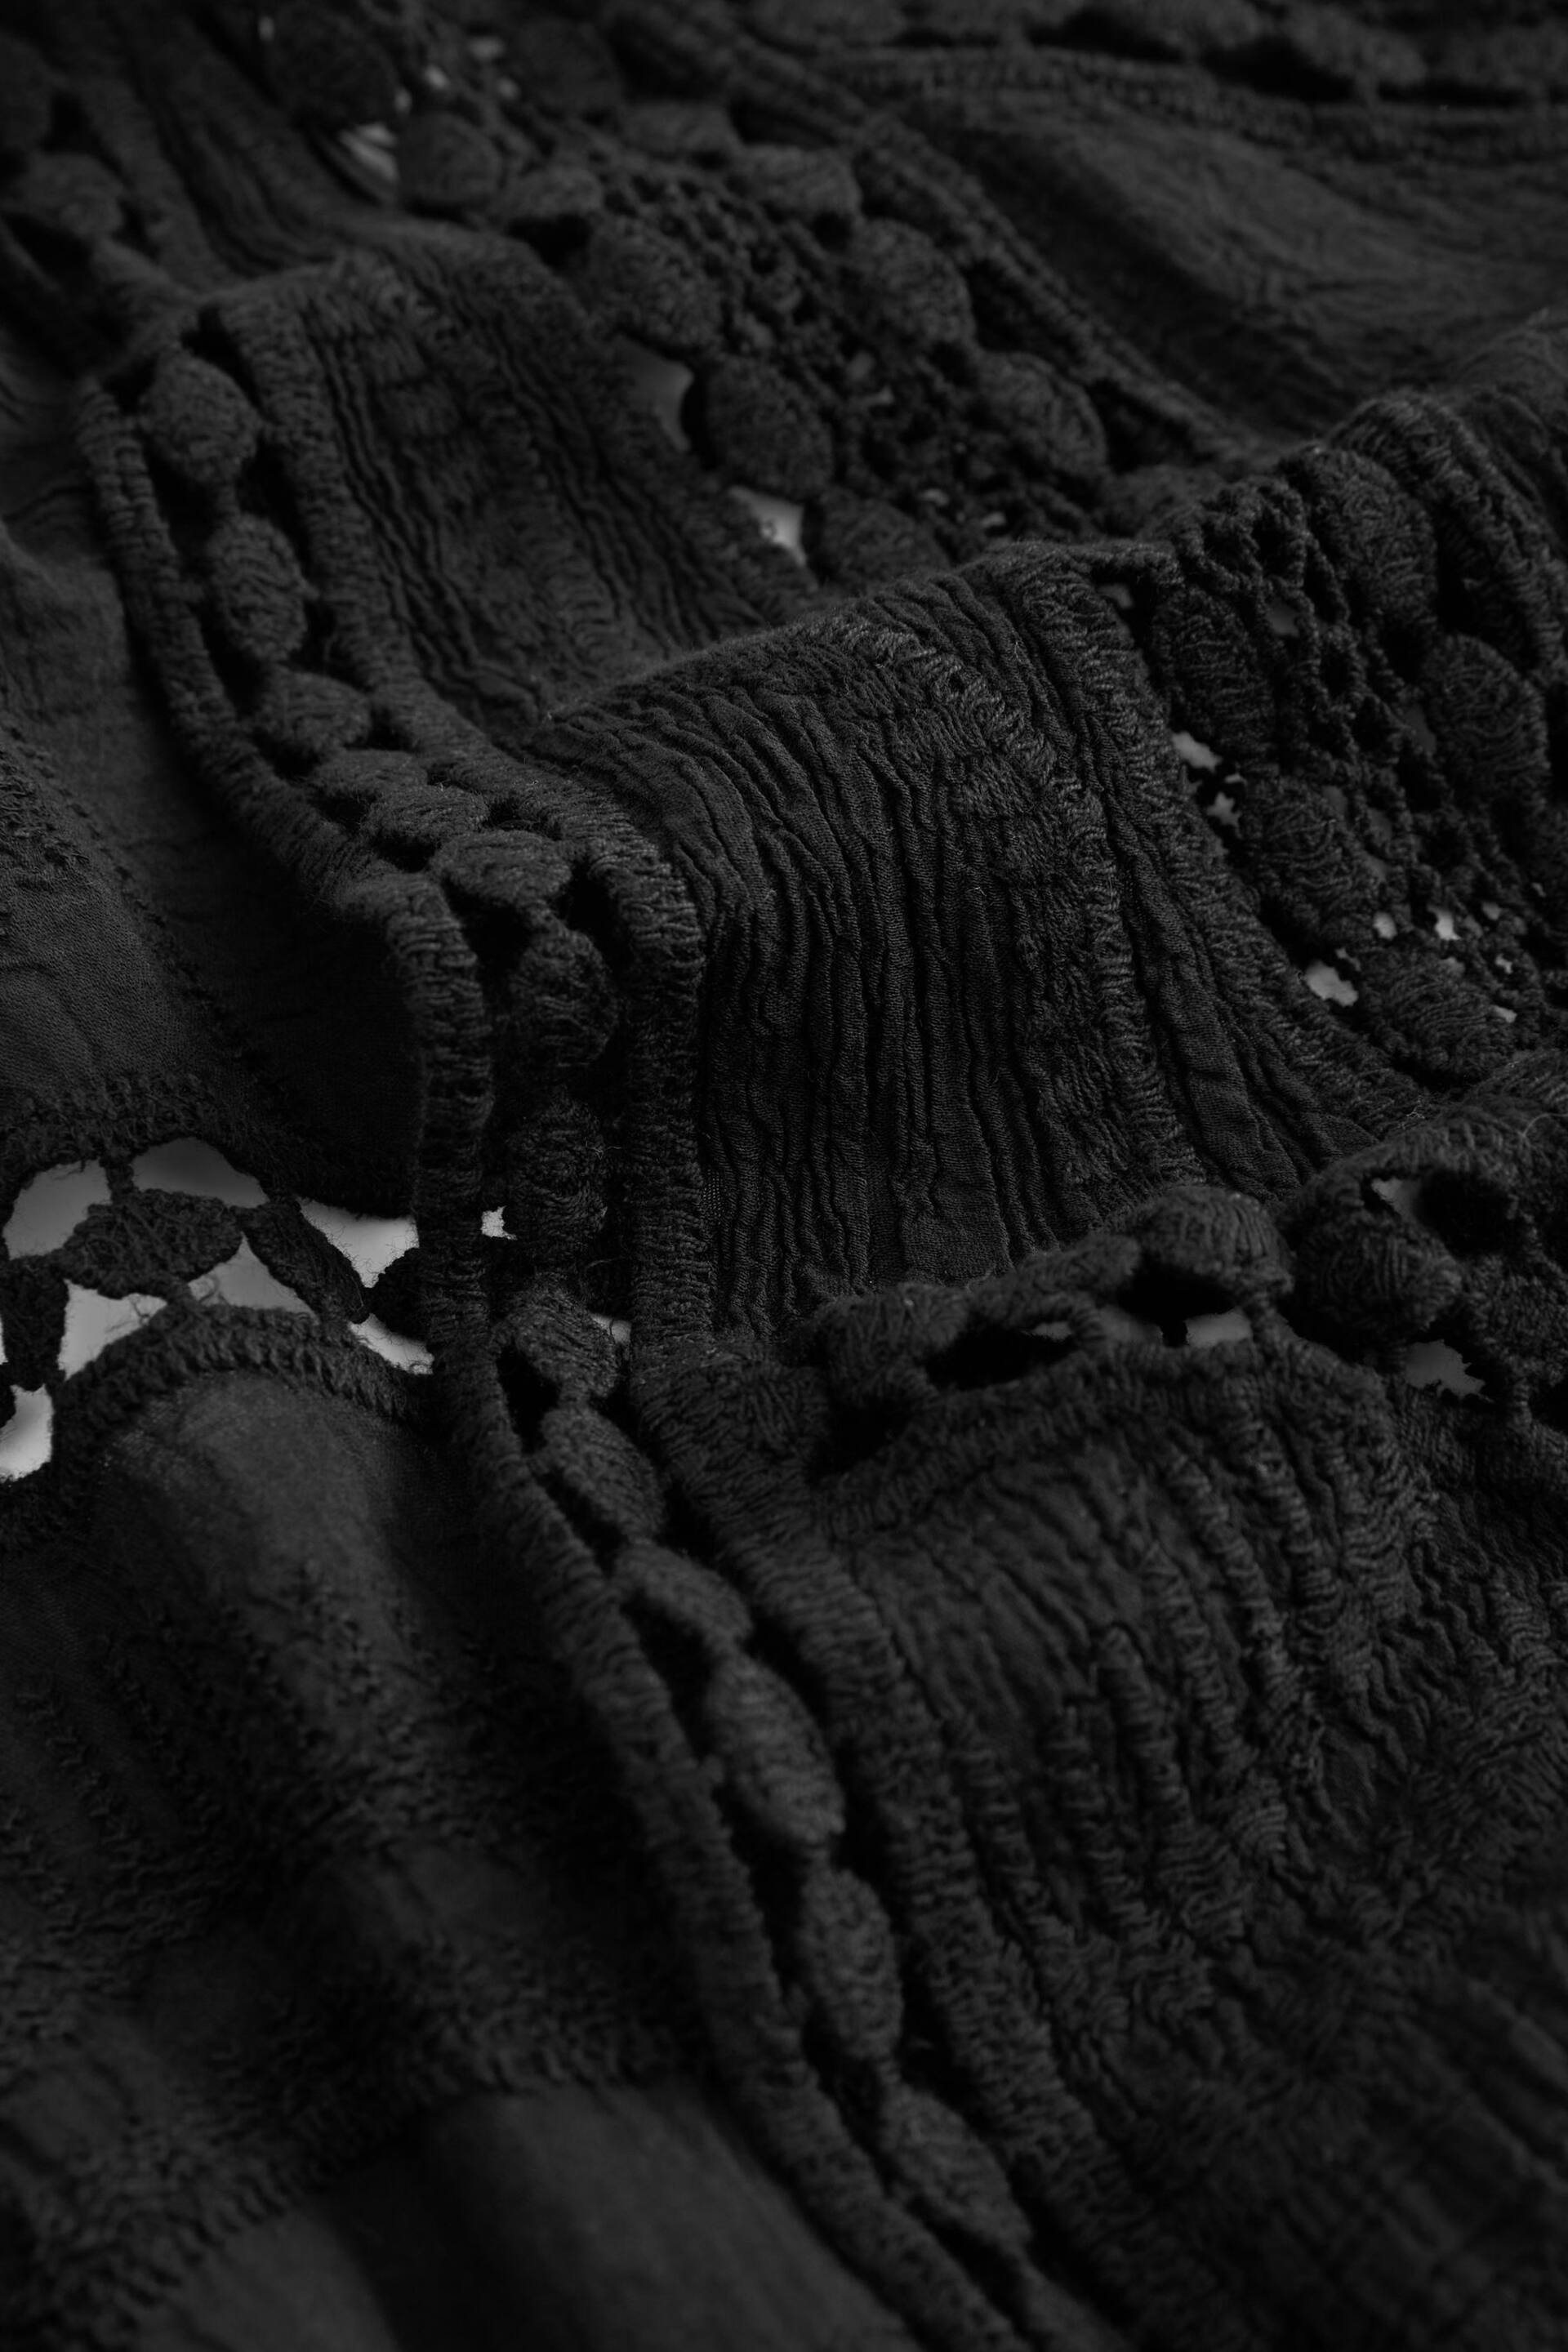 Black Crochet Longline Kimono Cover-Up - Image 7 of 7